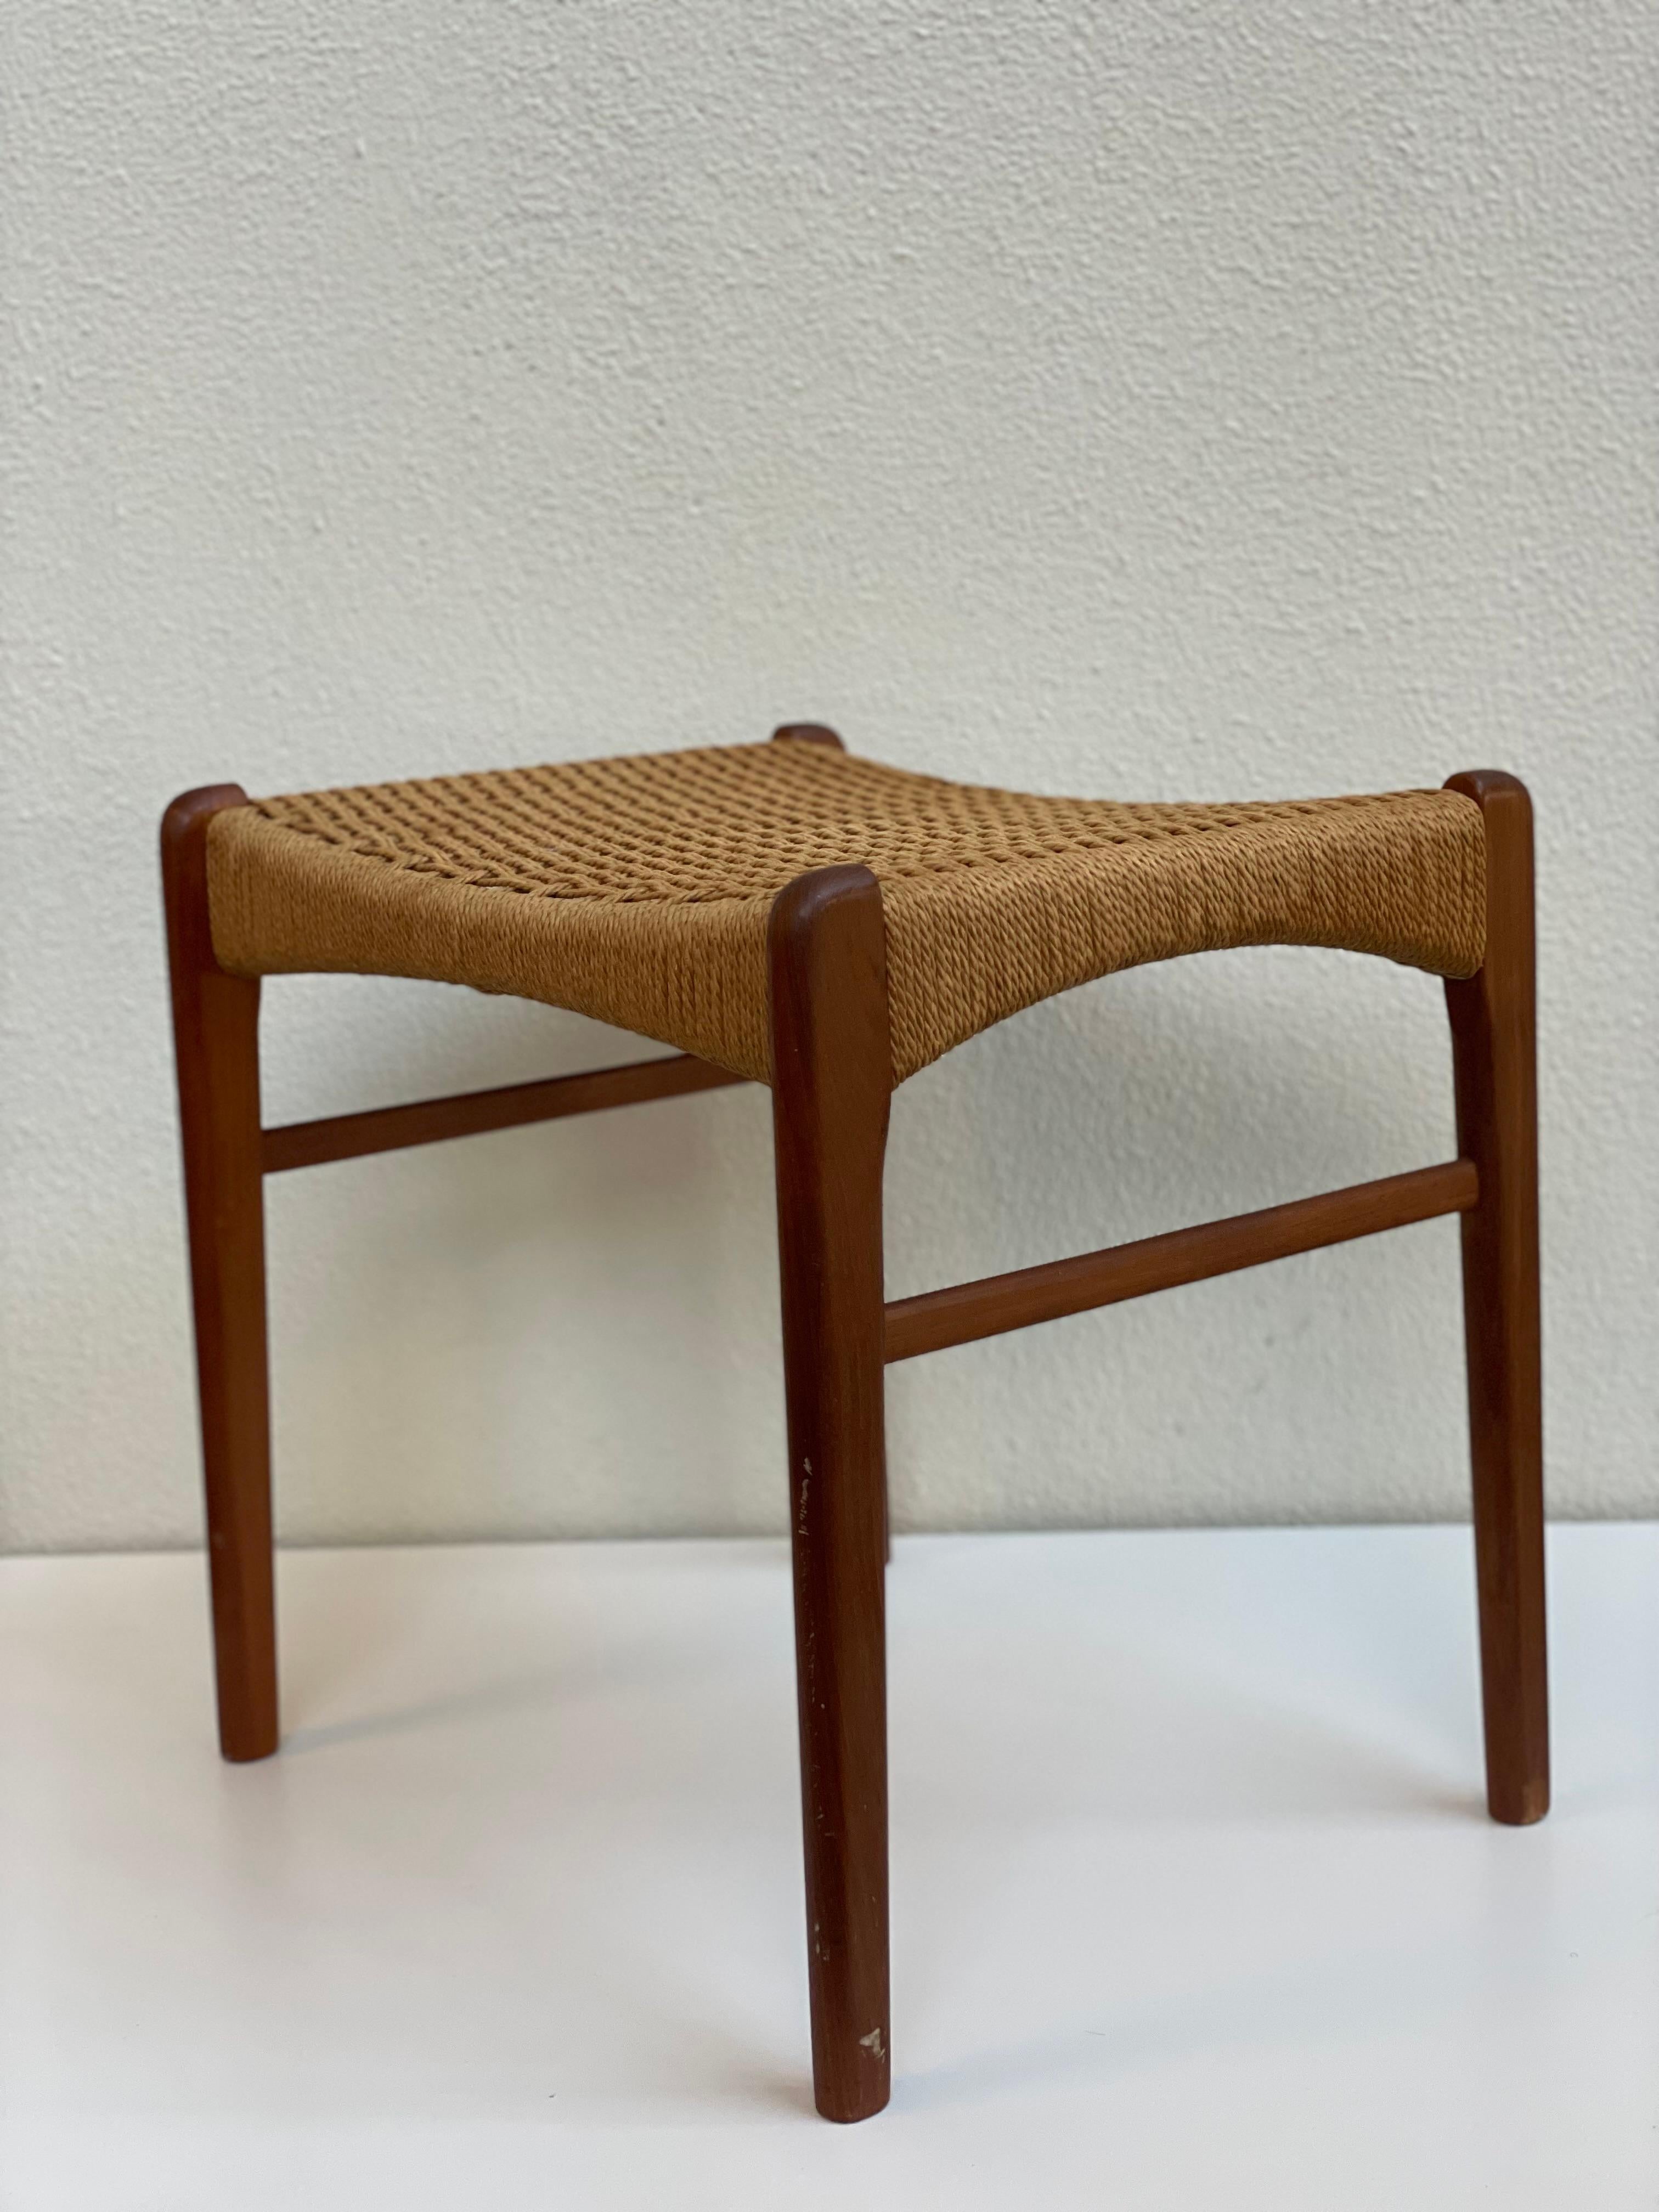 Beautiful Danish teak stool by Peder Kristensen for Glyngore Stolefabrik. Simple yet intricate design with he weave.